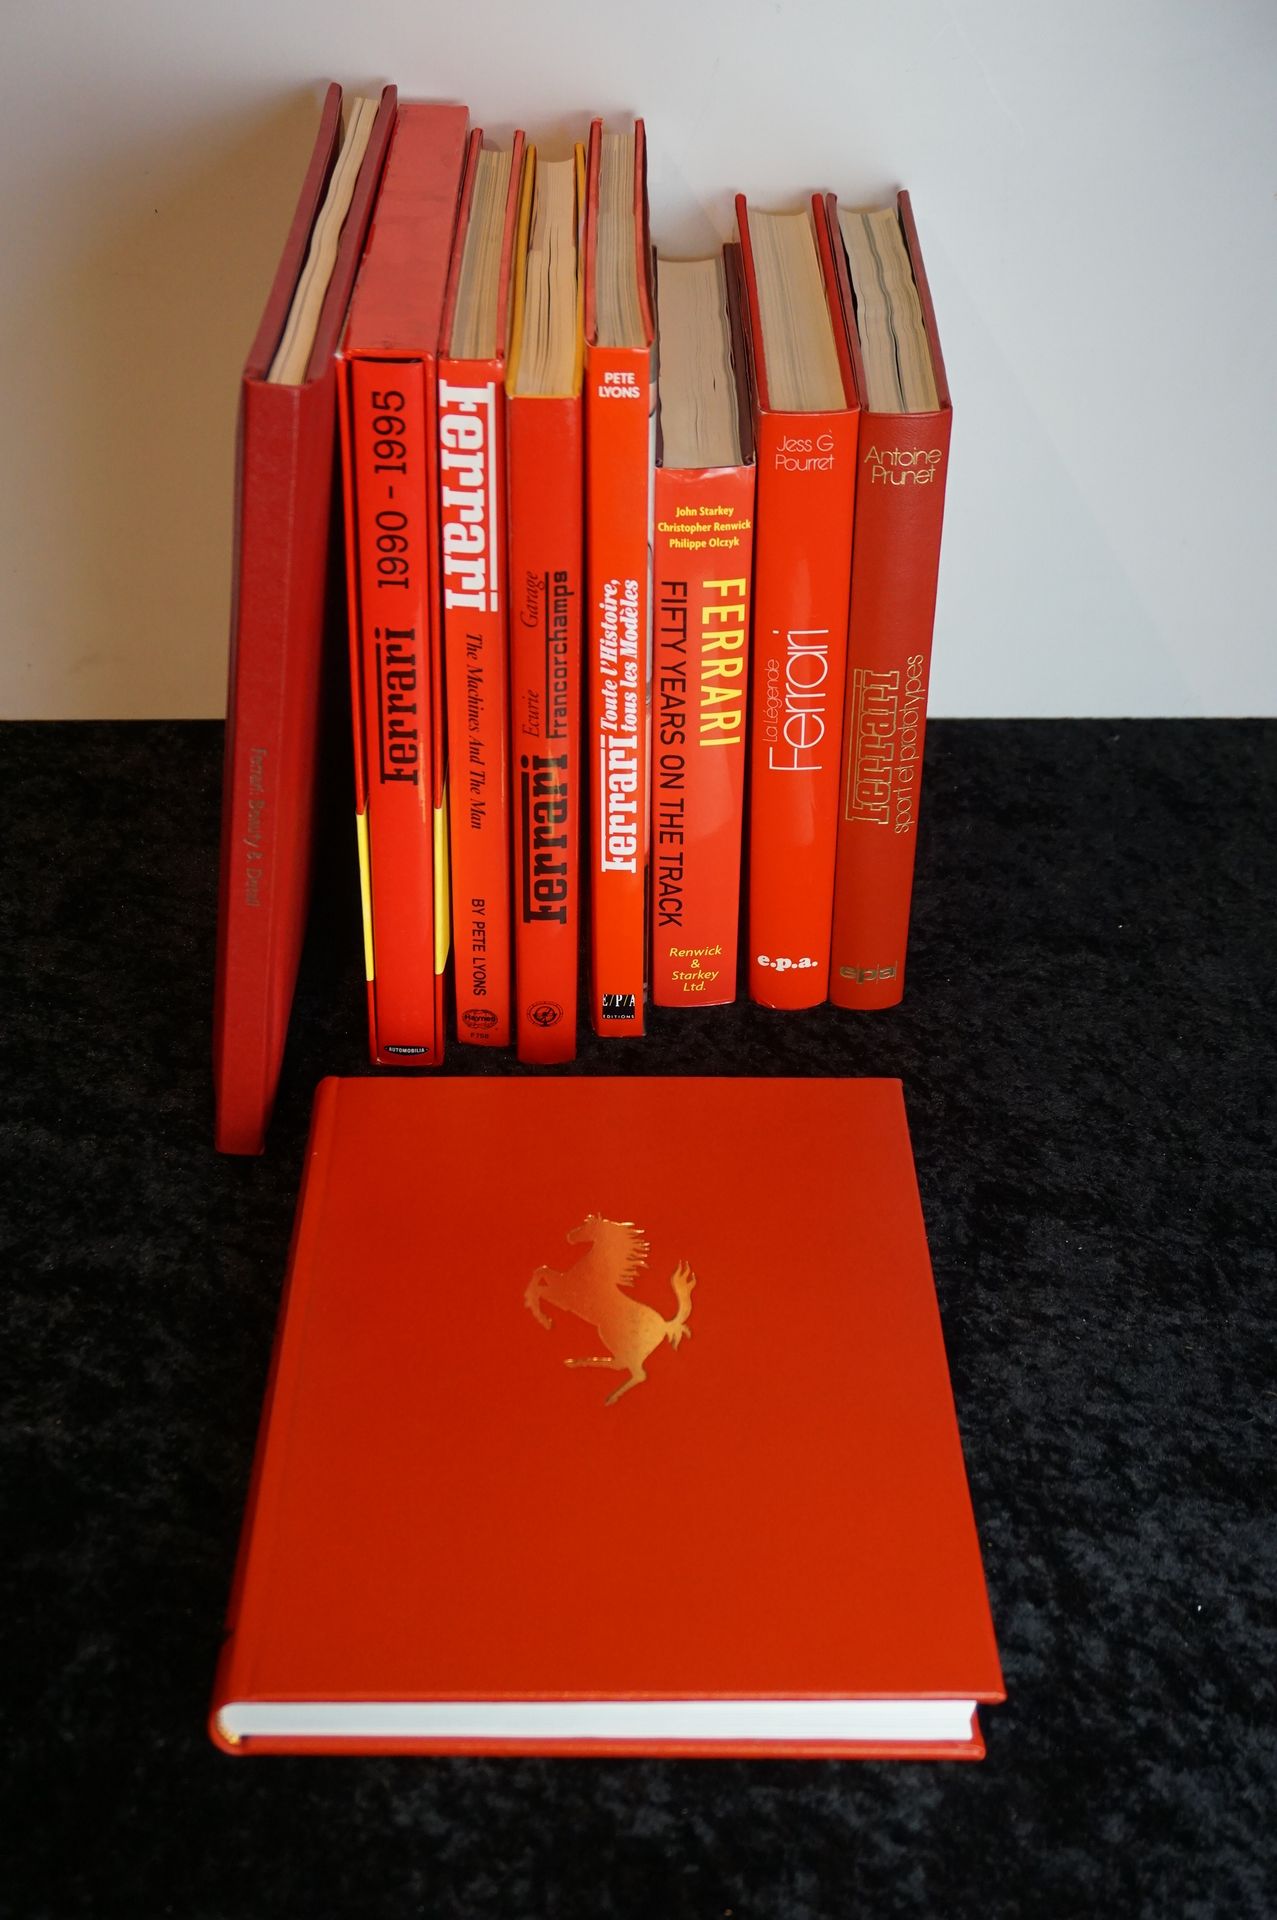 Null Books Ferrari :
- Ferrari, The Legend ; Ed e.P.A : Jess G Pourret
- Ferrari&hellip;